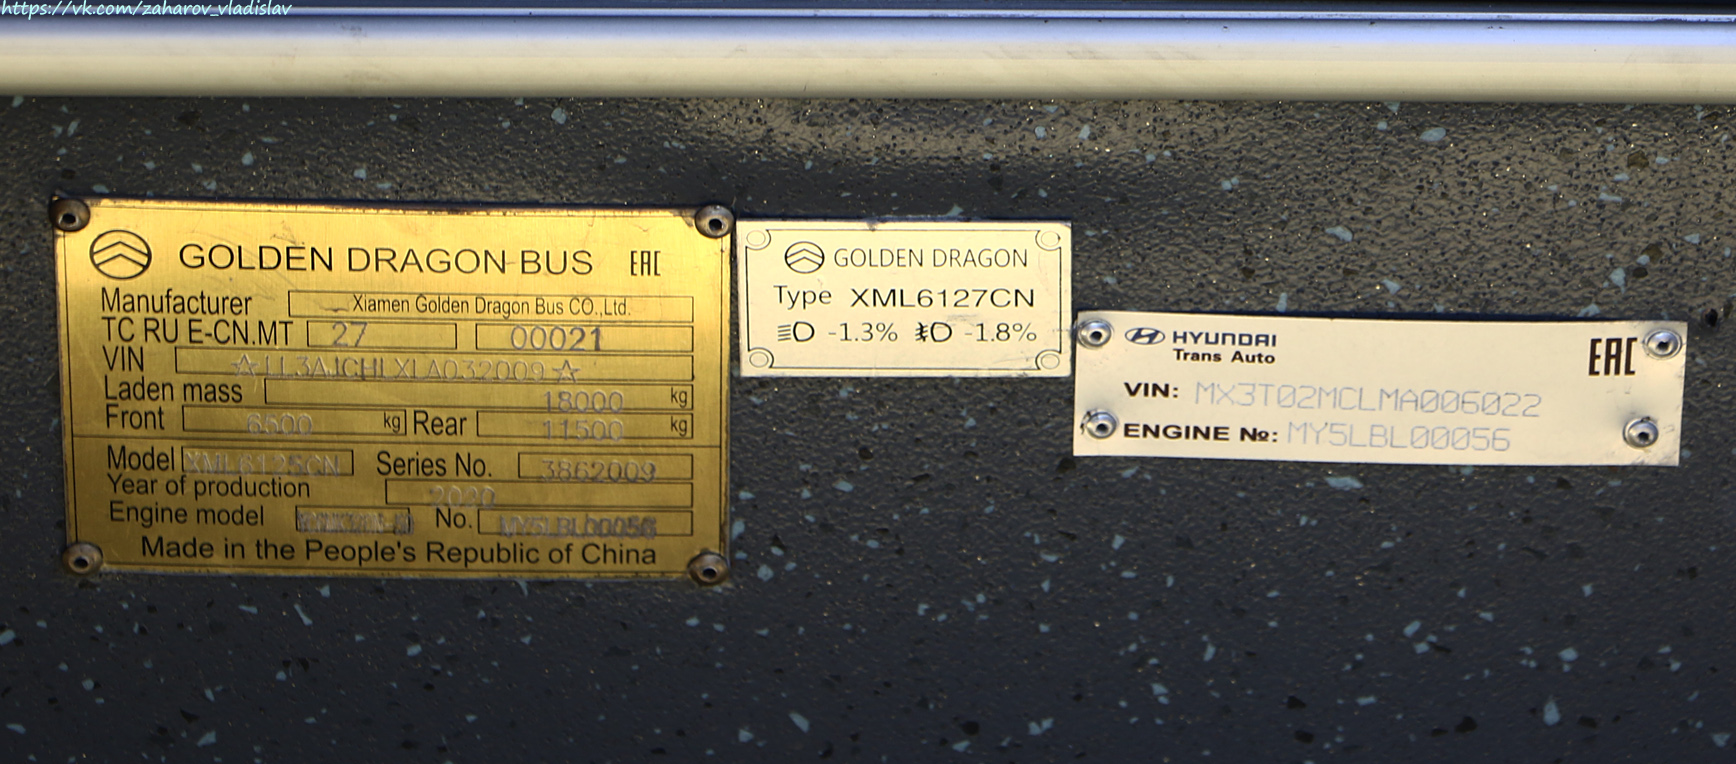 Алматы, Golden Dragon XML6125CN (Hyundai Trans Auto) № 3639